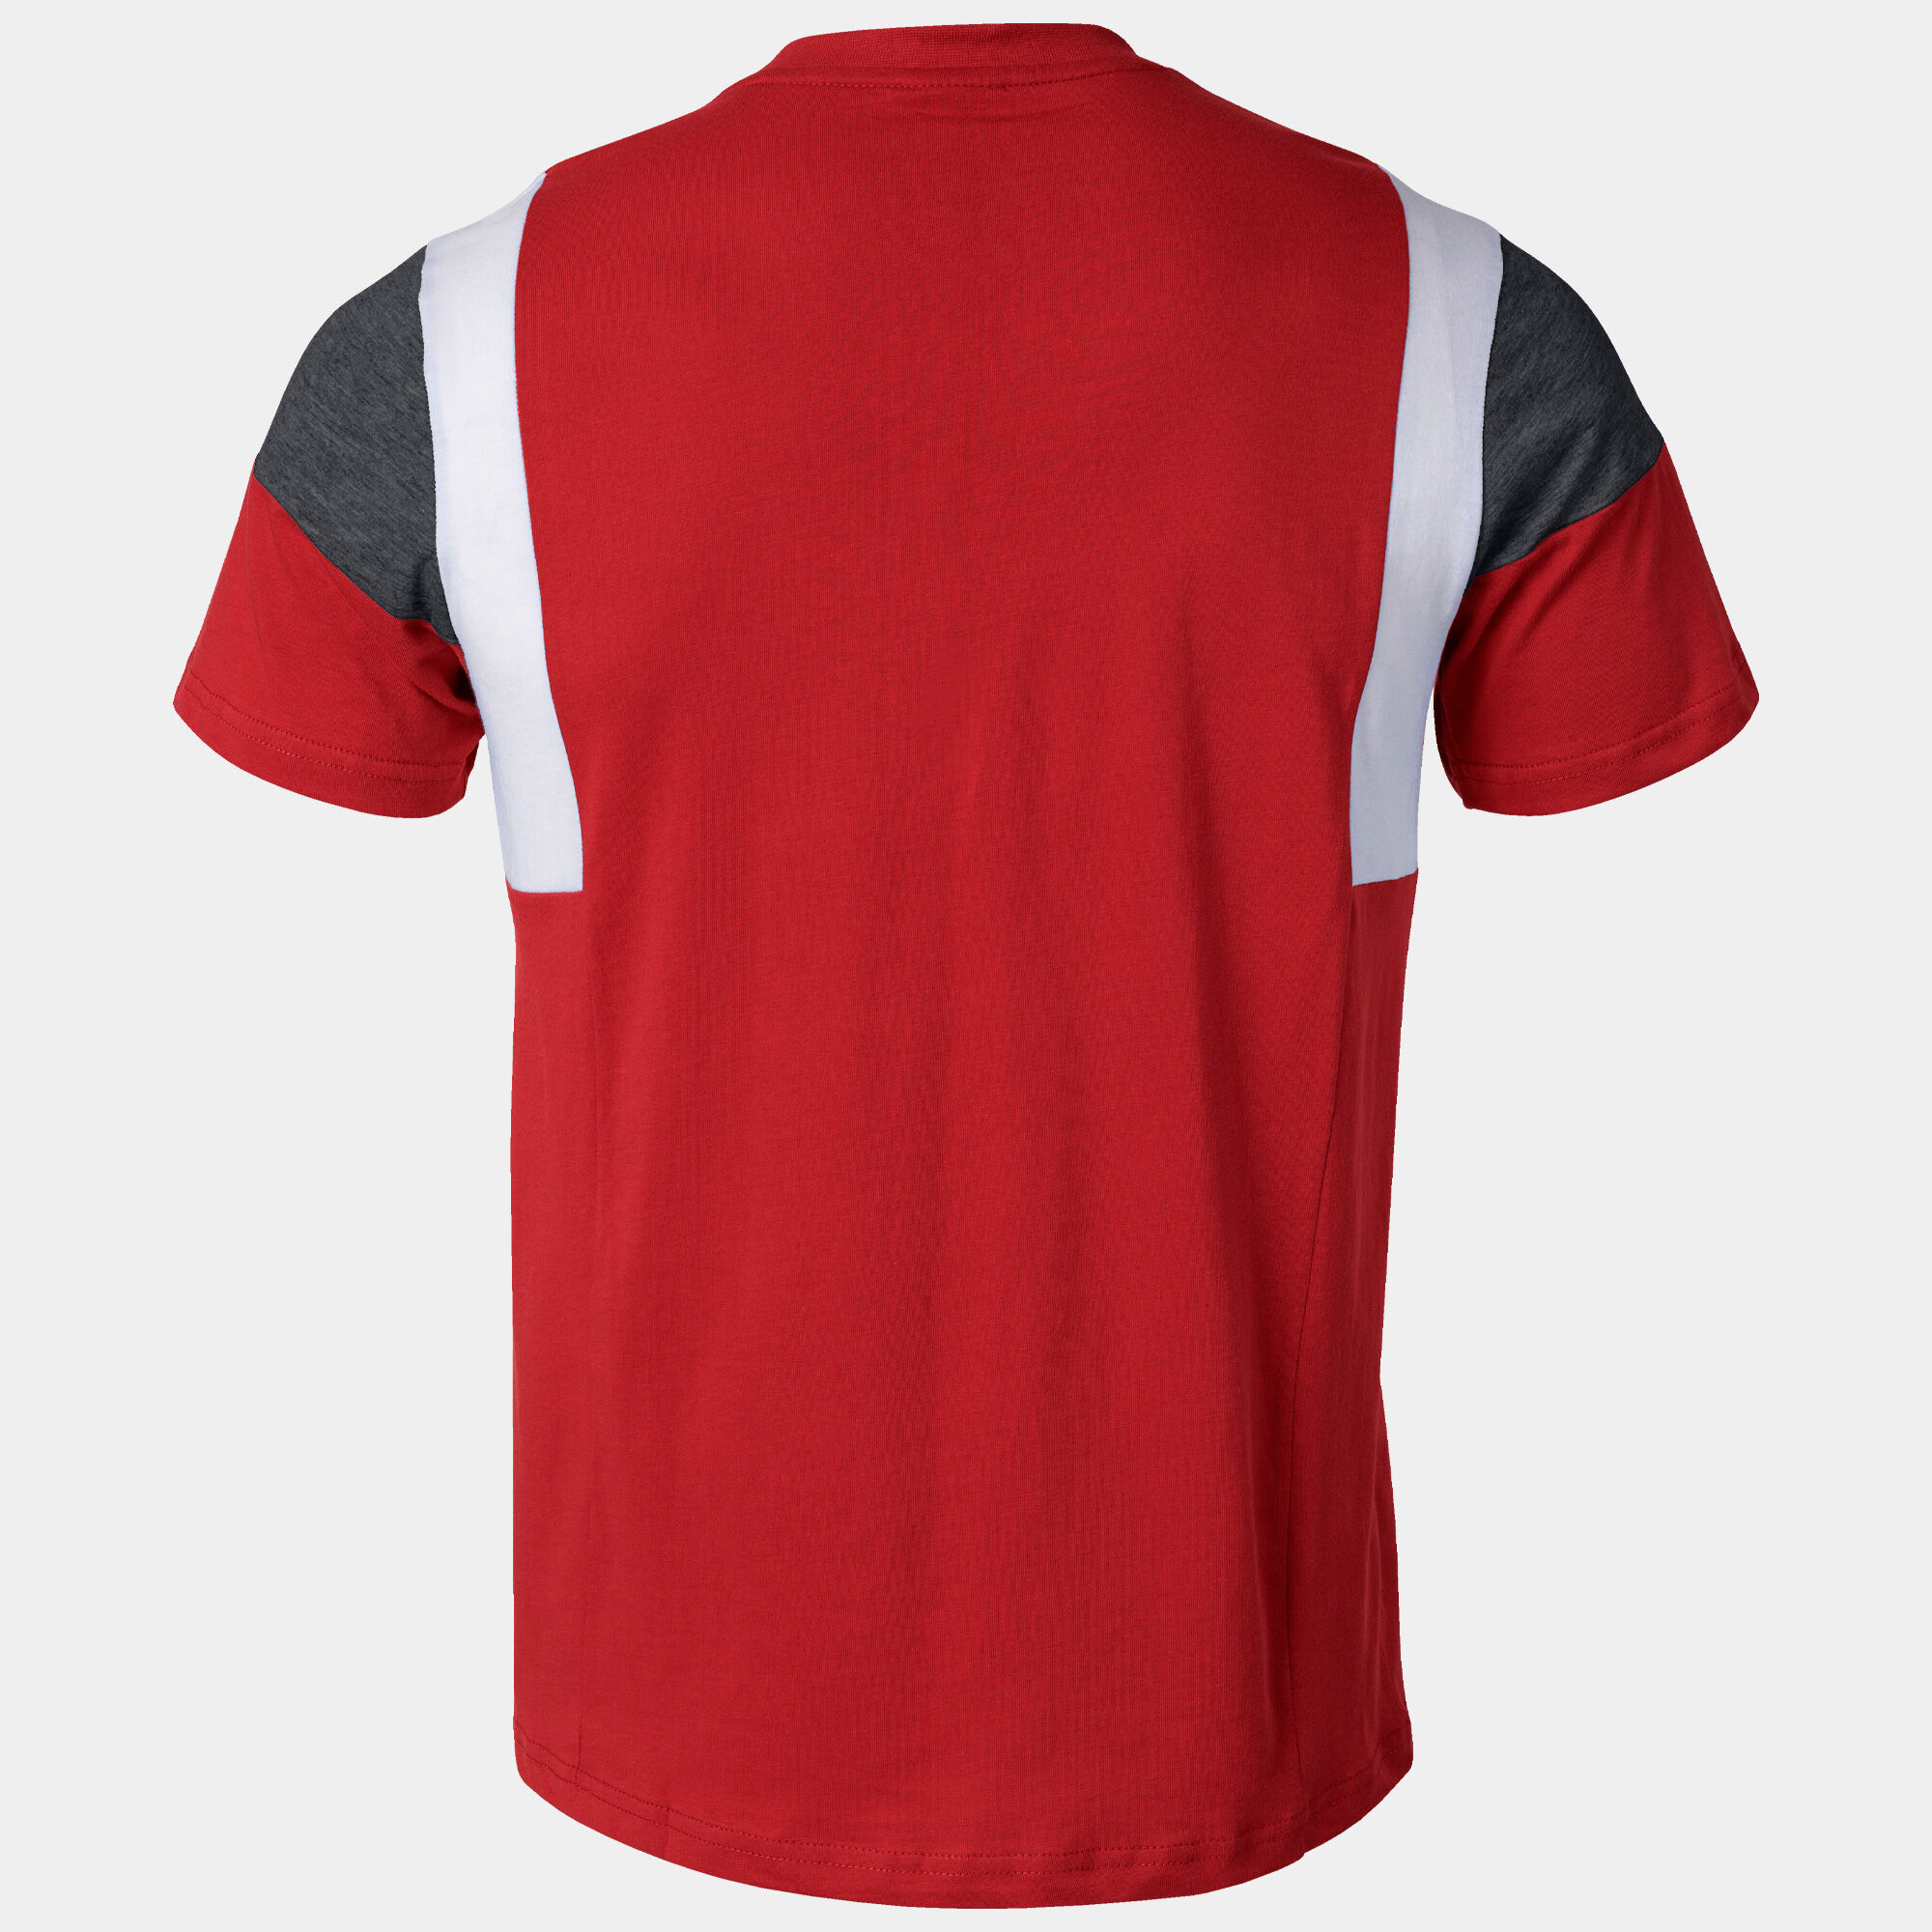 Camiseta manga corta hombre Confort III rojo